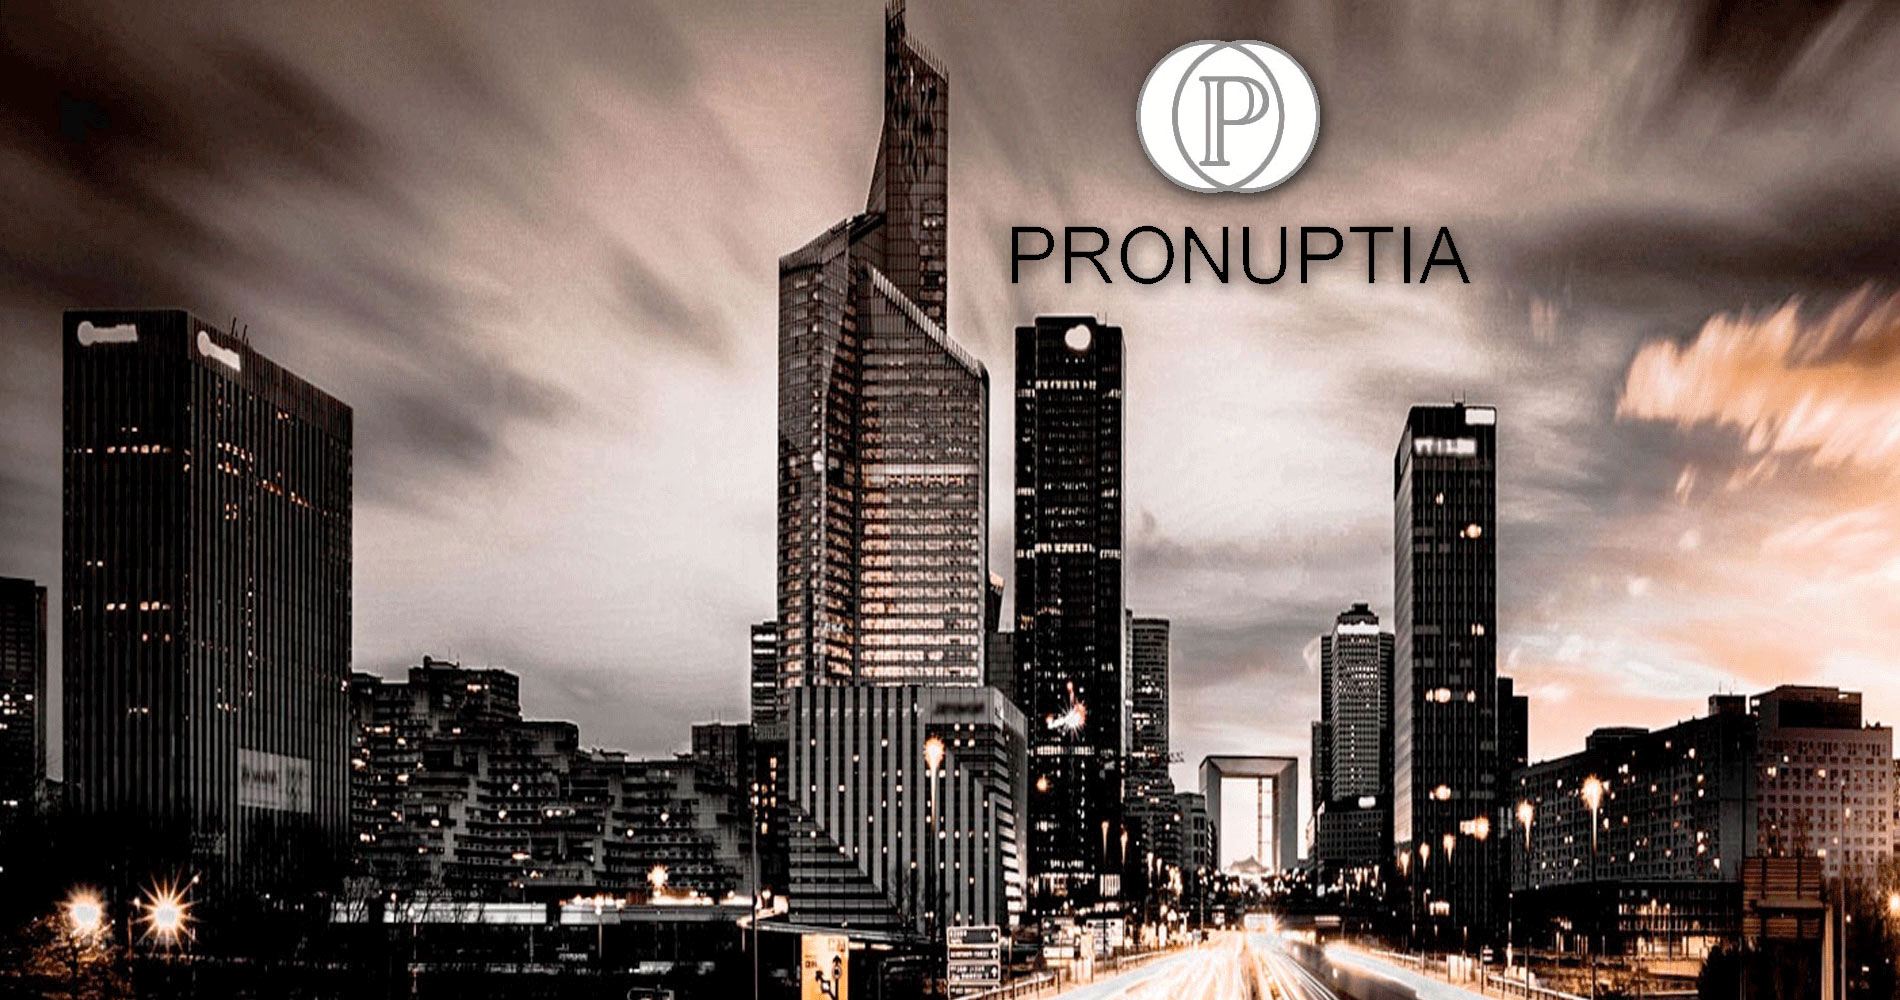 l'histoire du groupe Pronuptia